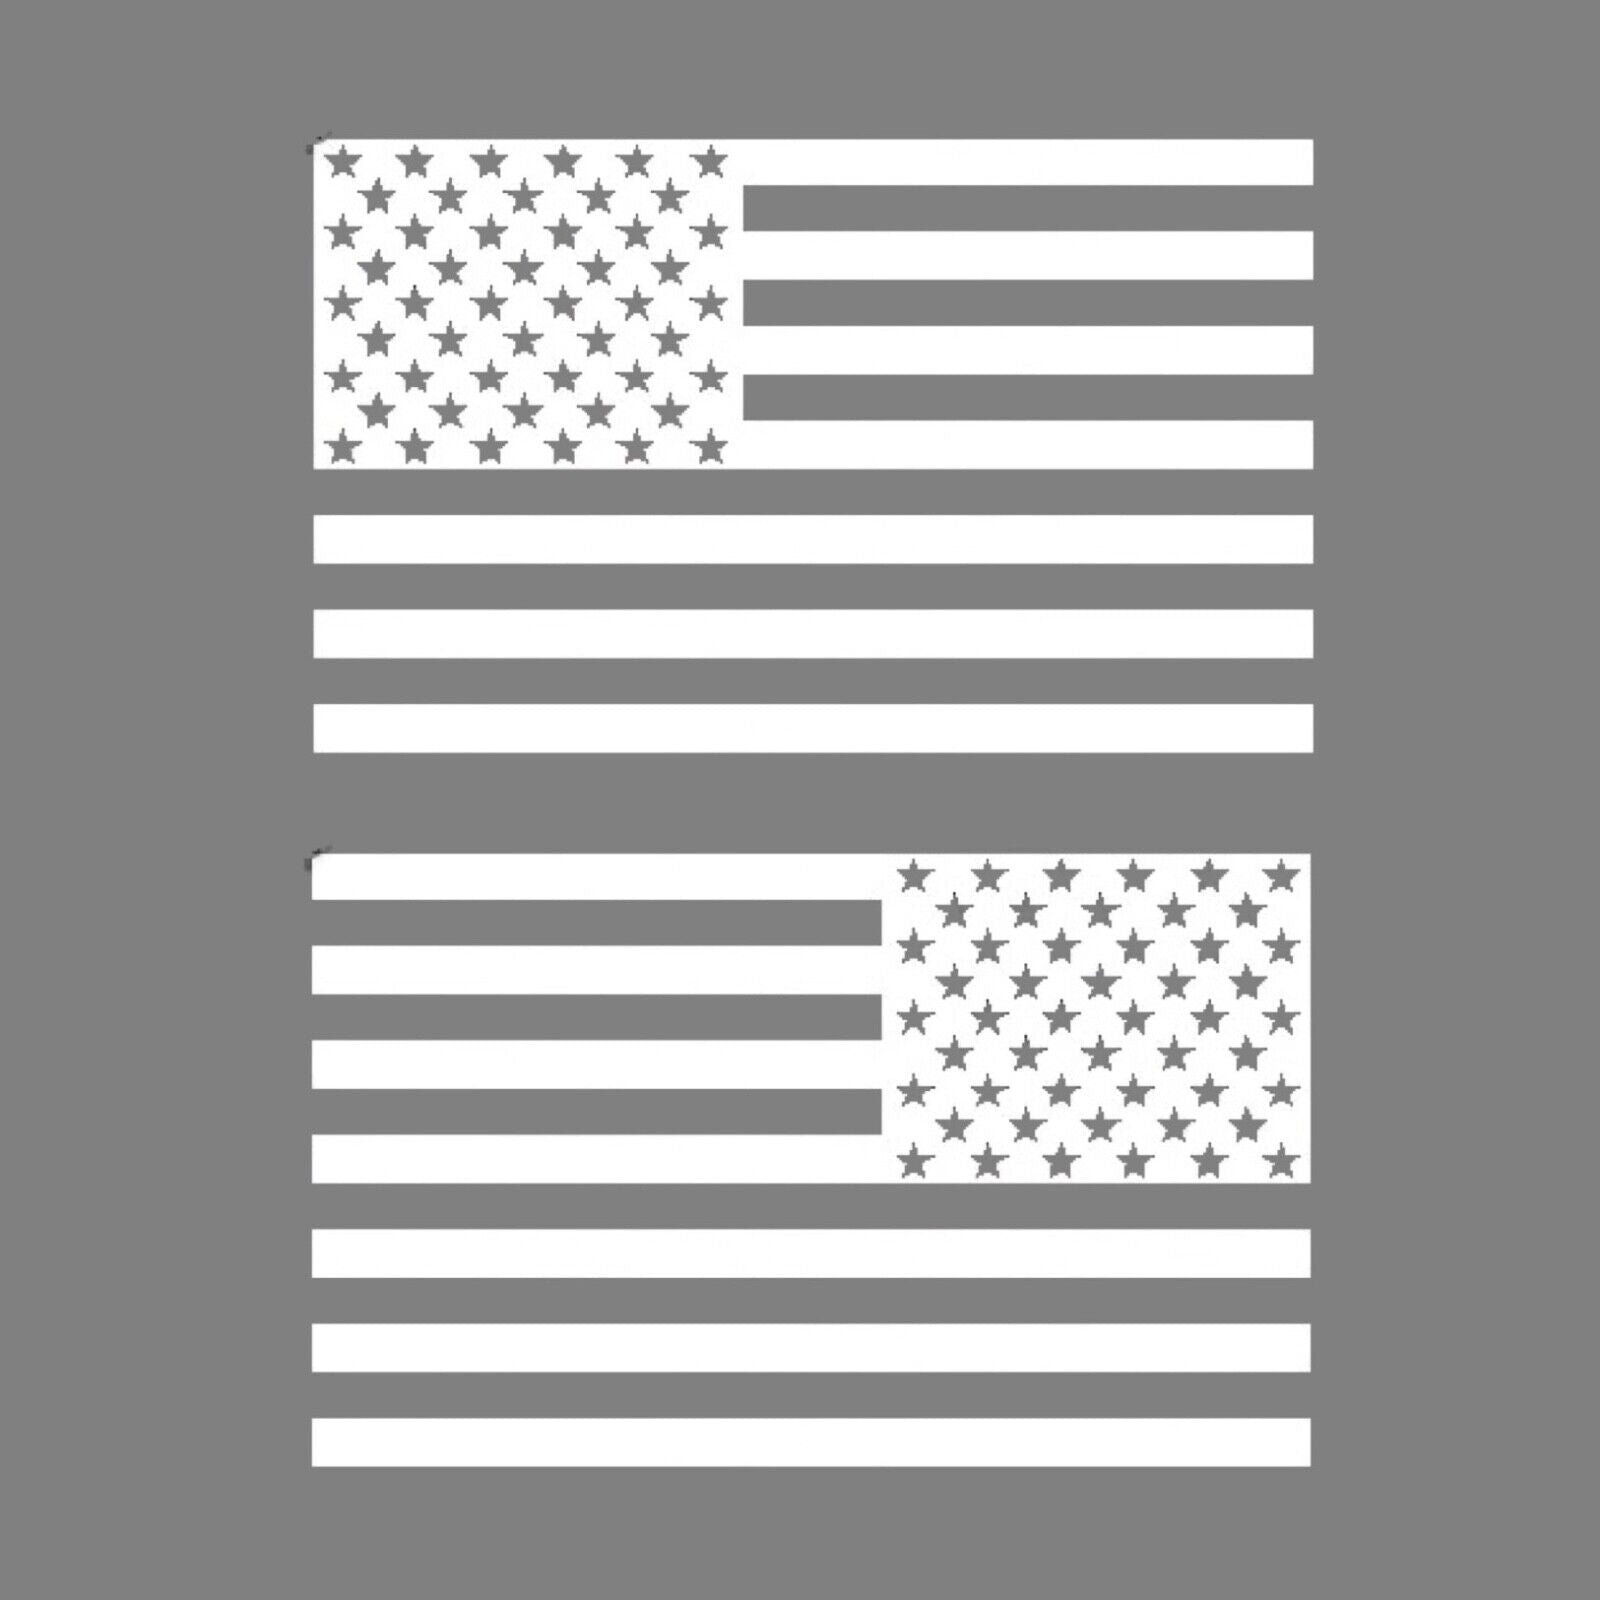 Pair (2) 3x5 Matte Black American Flag Die Cut Vinyl Decal Stickers for Trucks